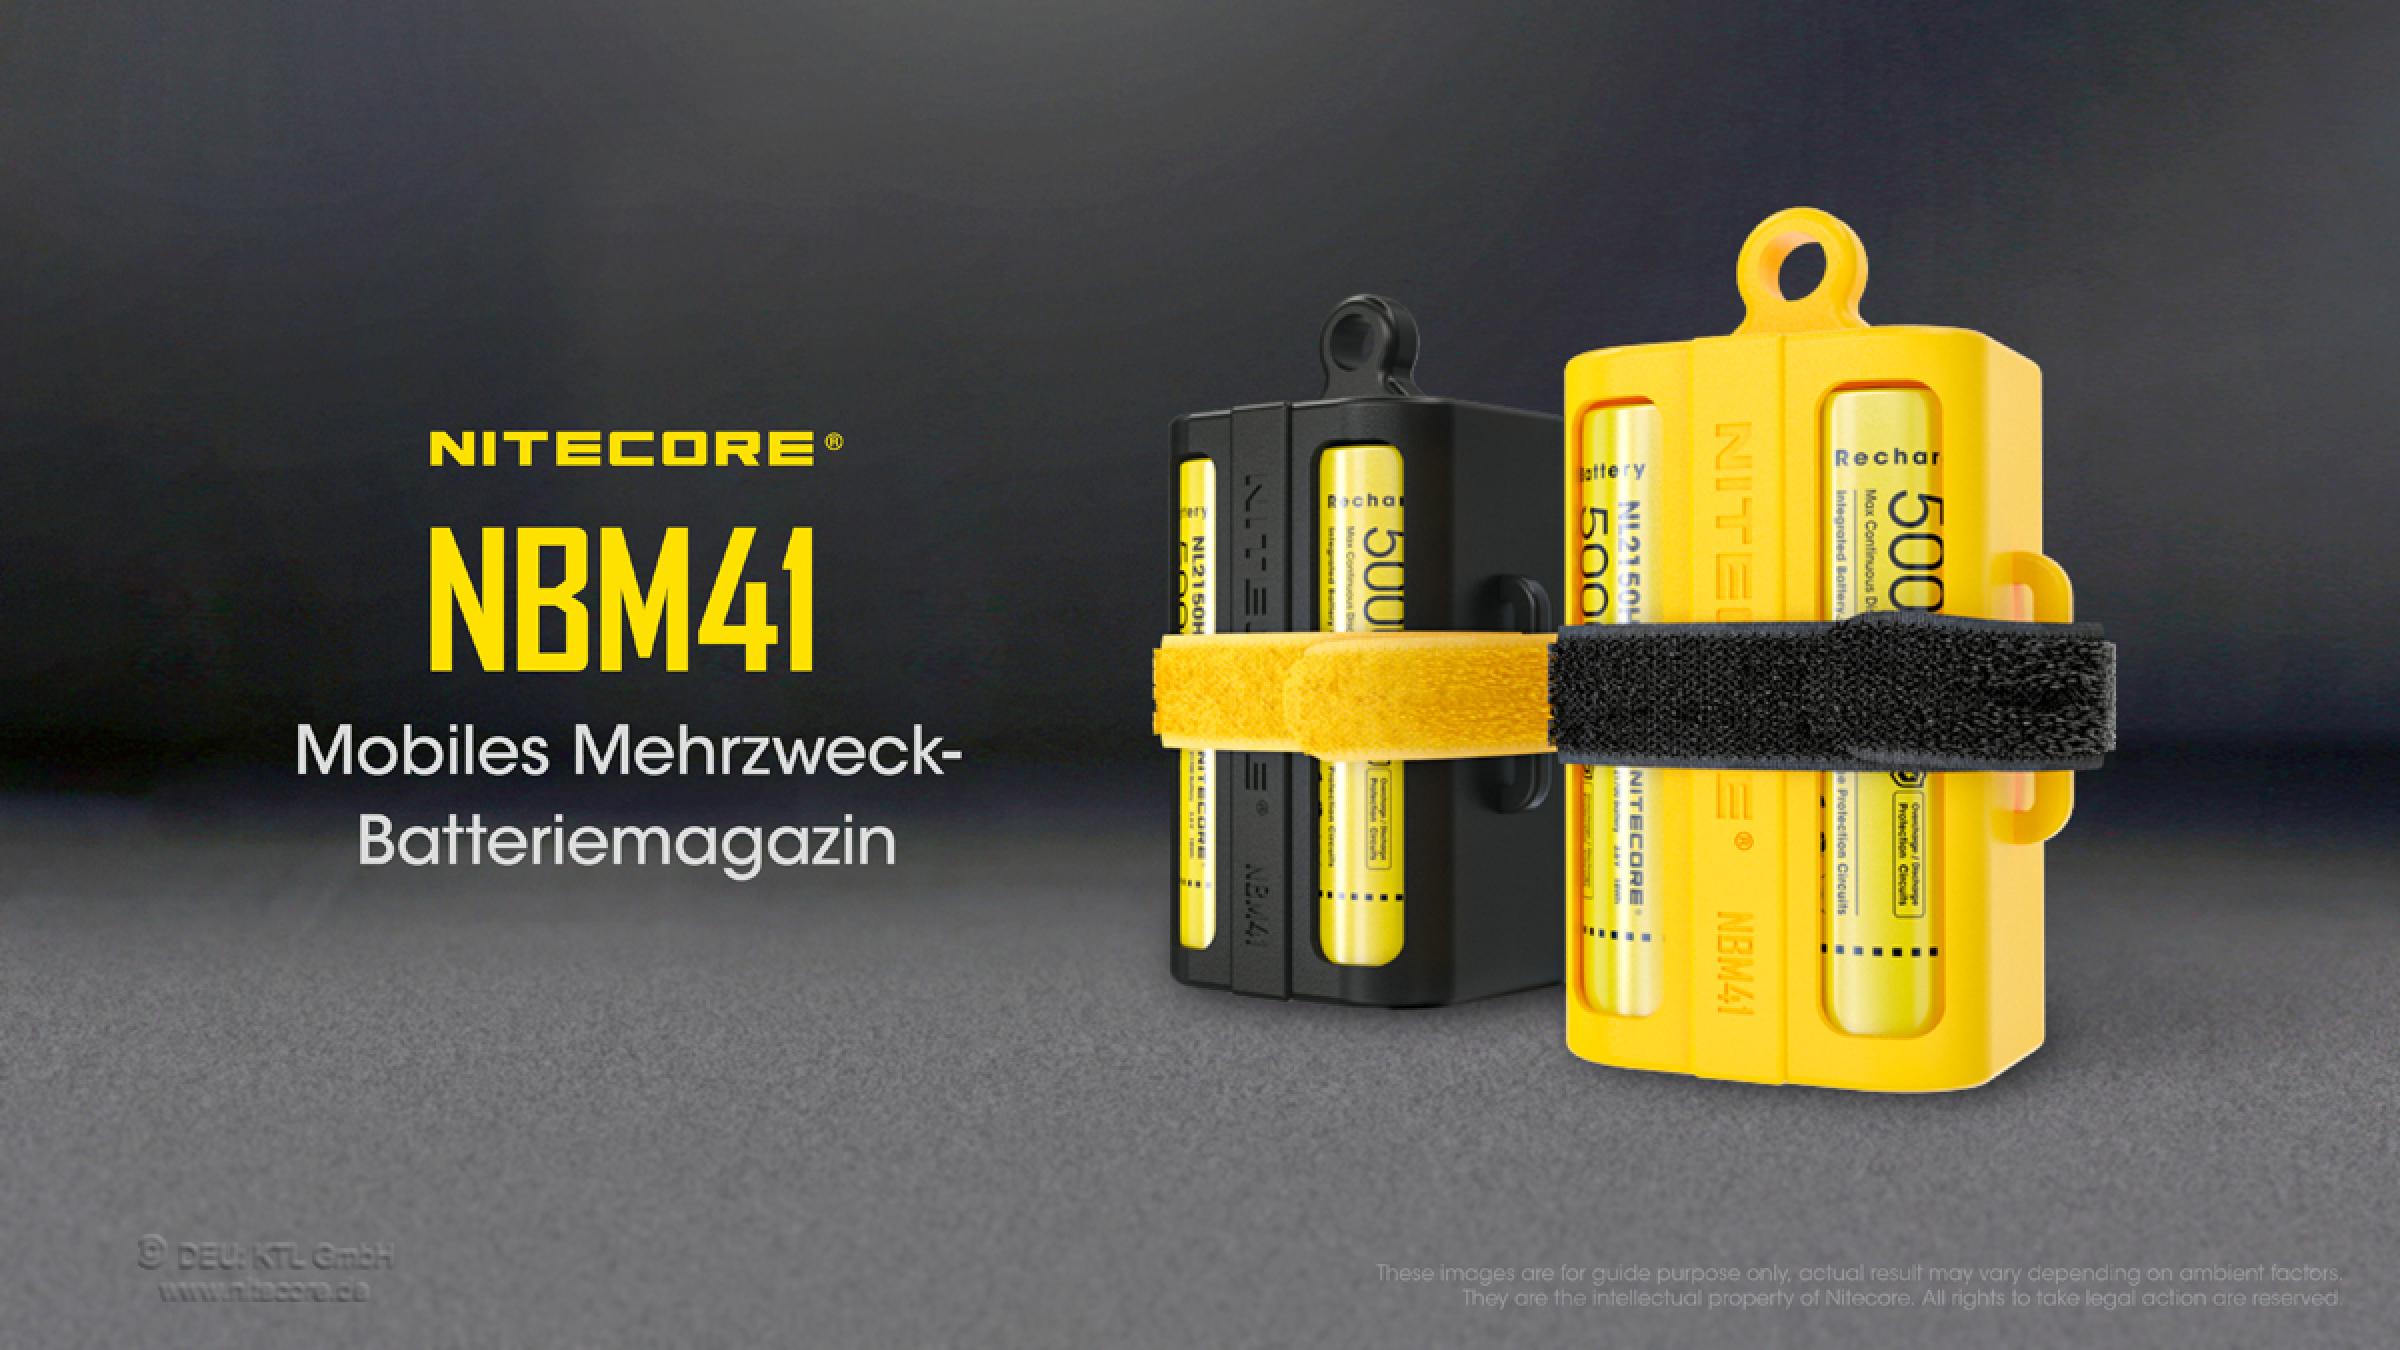 Nitecore NBM41 battery magazine - yellow